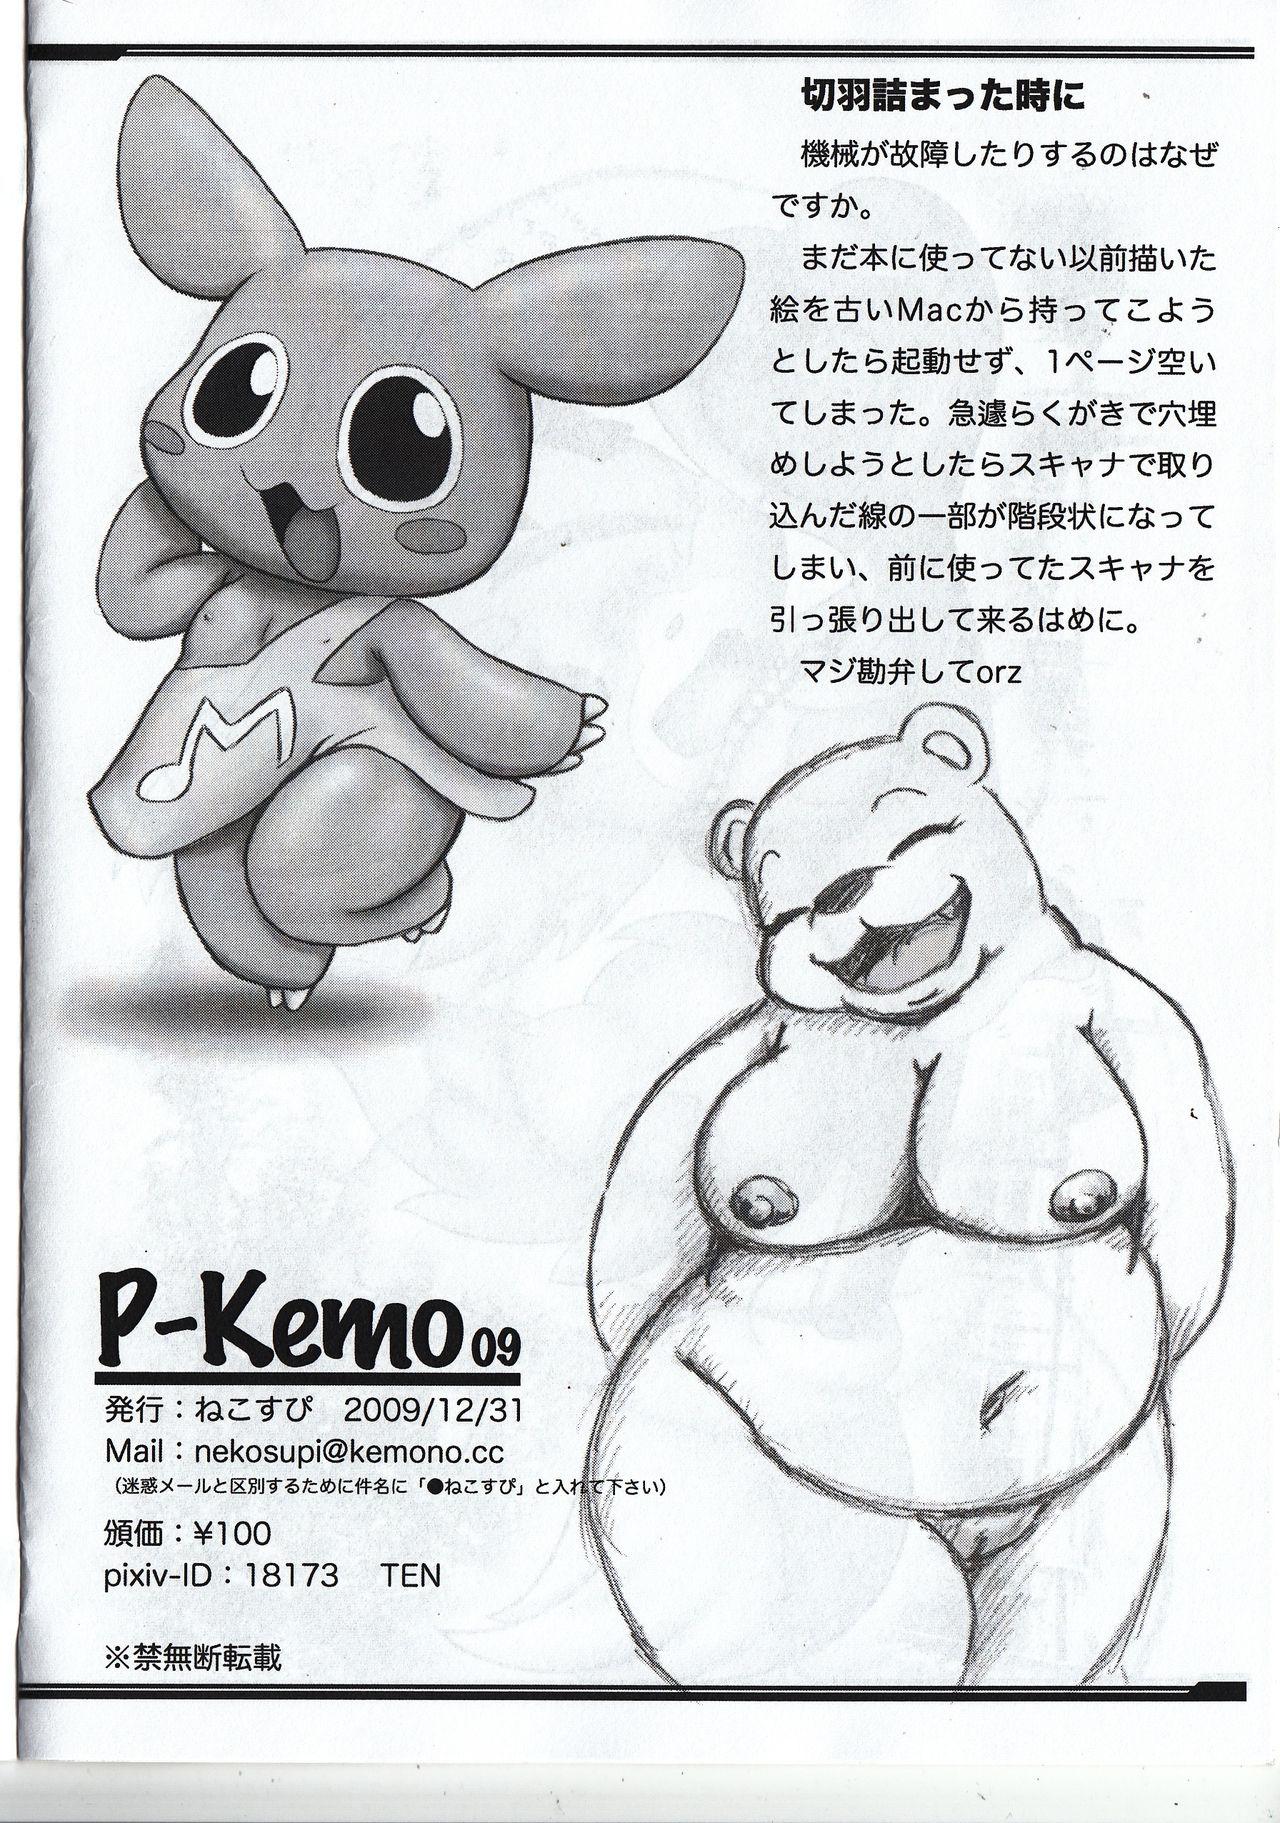 P-Kemo09 12